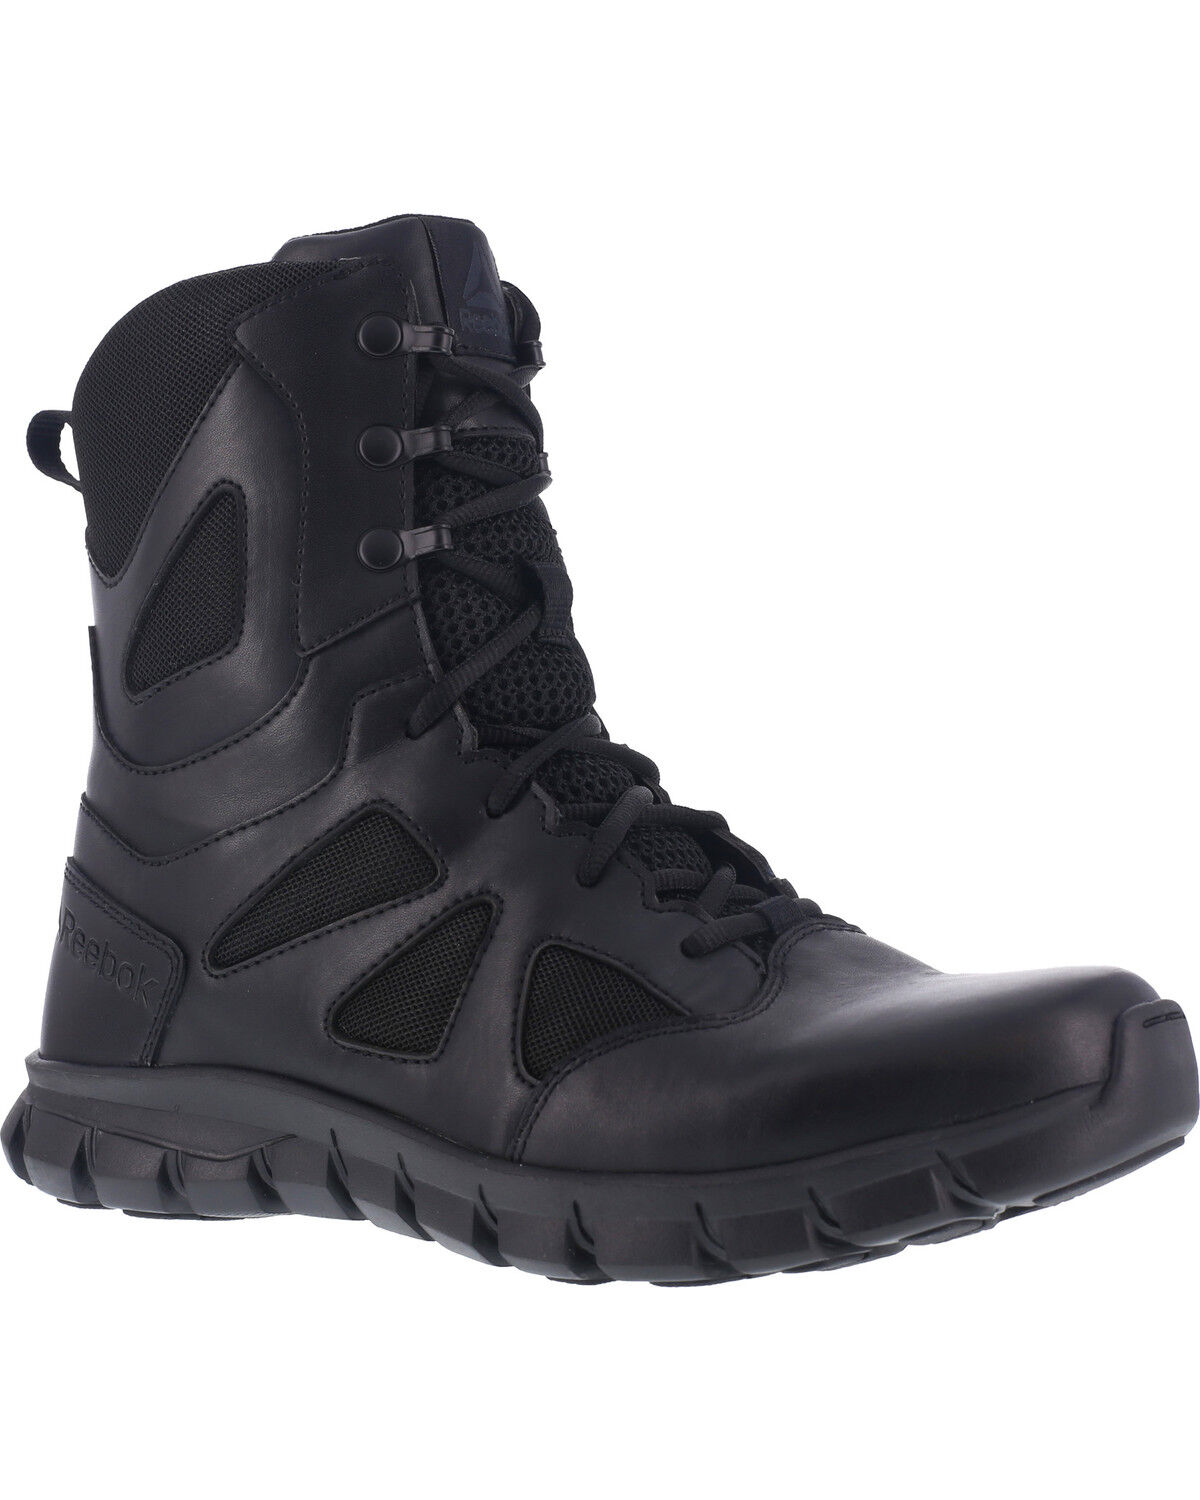 Reebok Tactical Boots - Sheplers